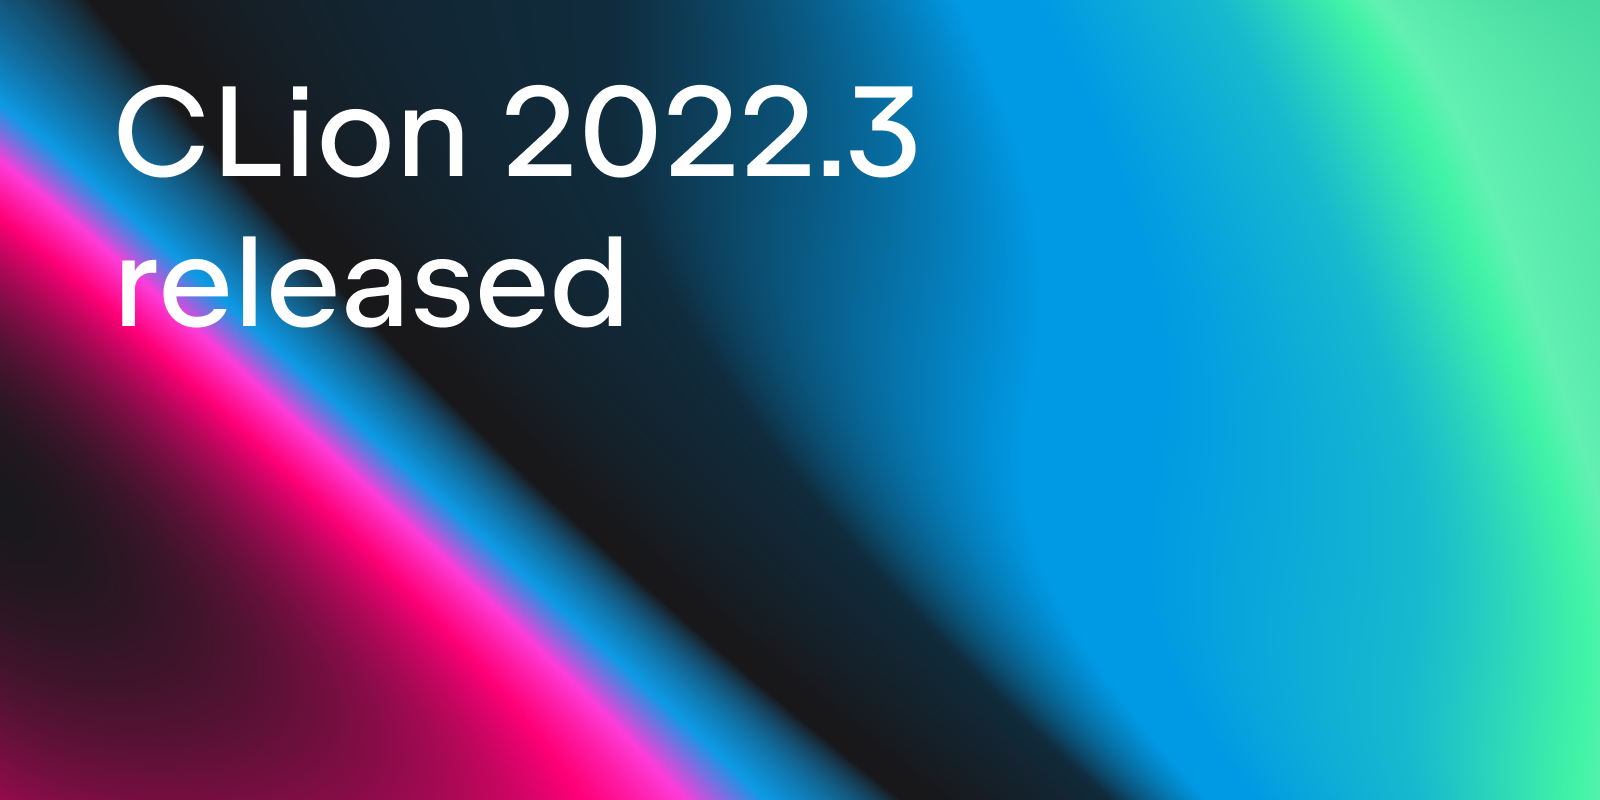 CLion 2022.3 release